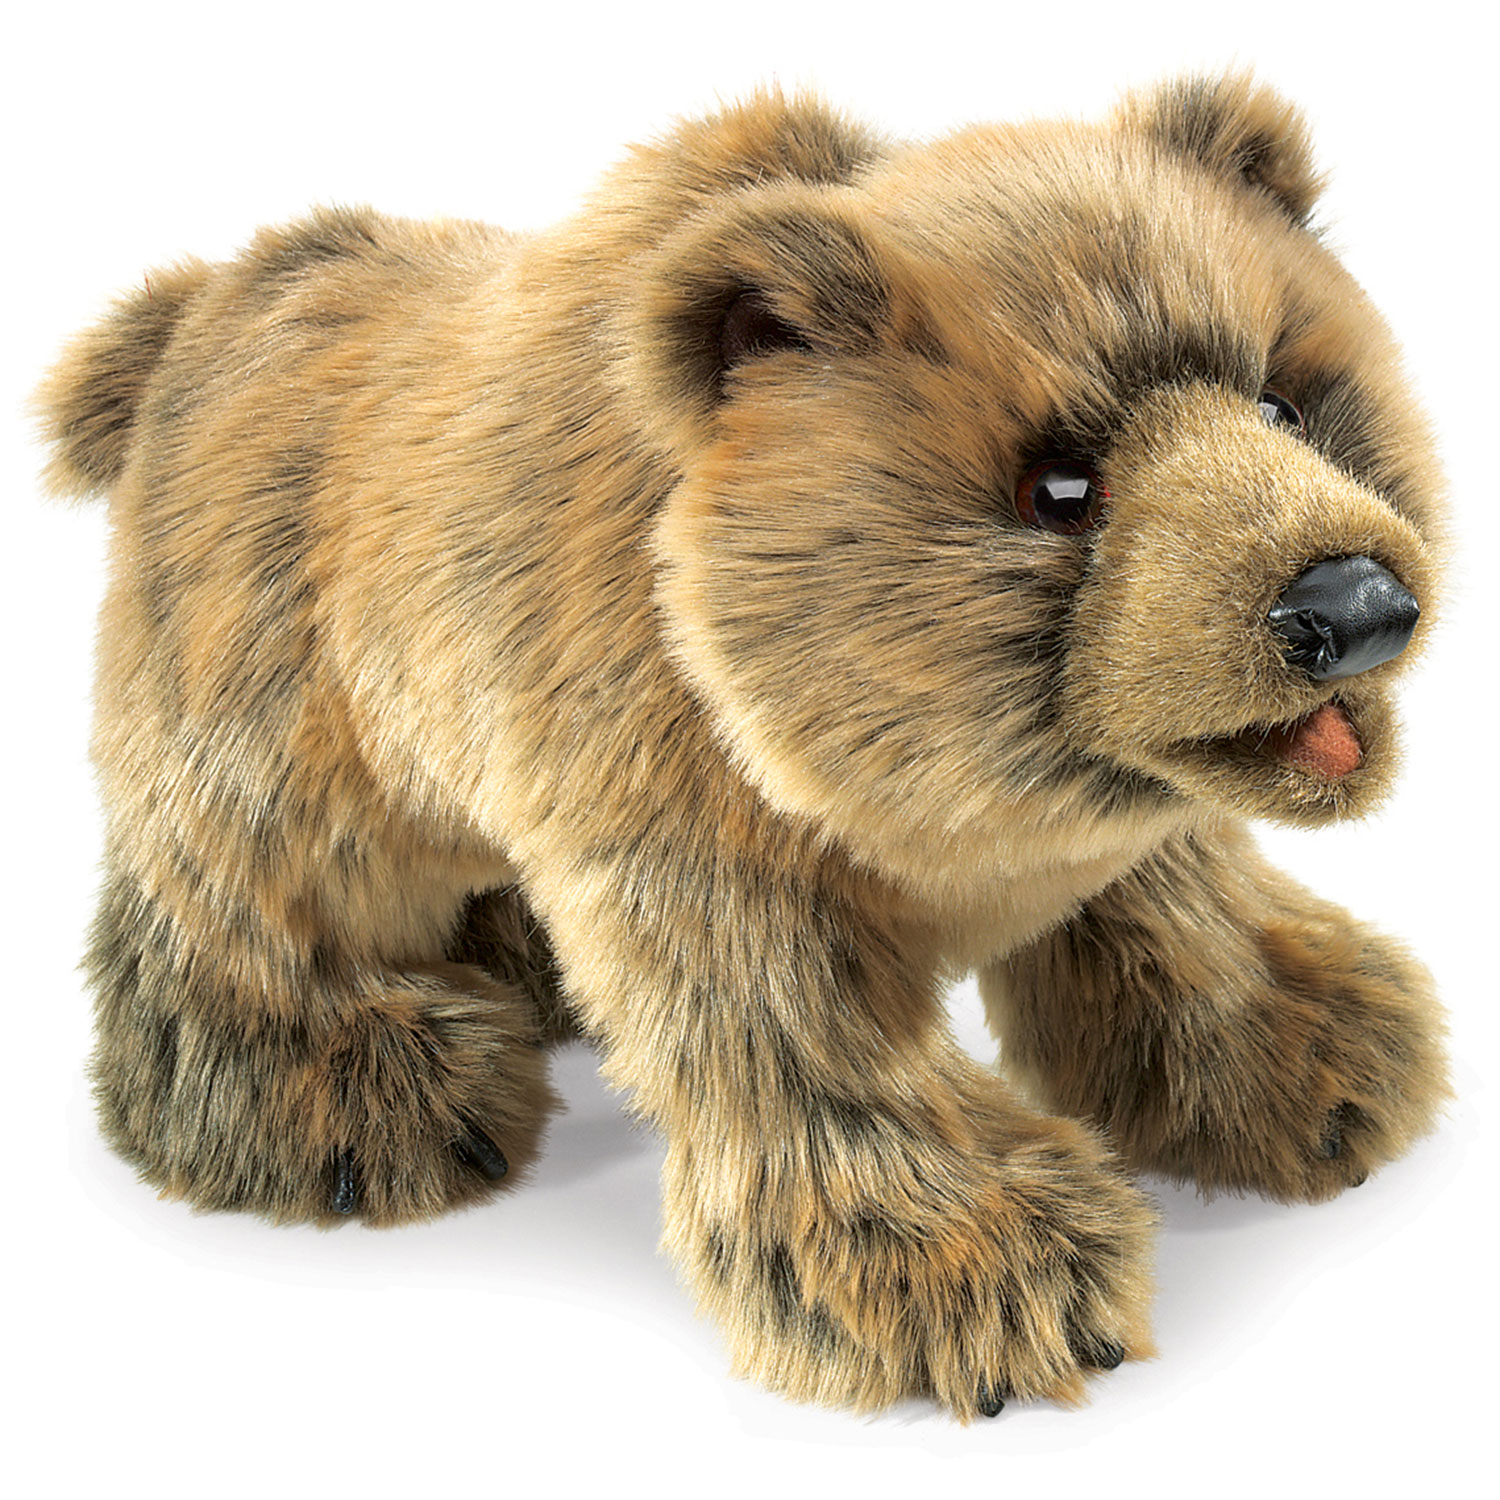 Grizzlybär / Grizzly Bear